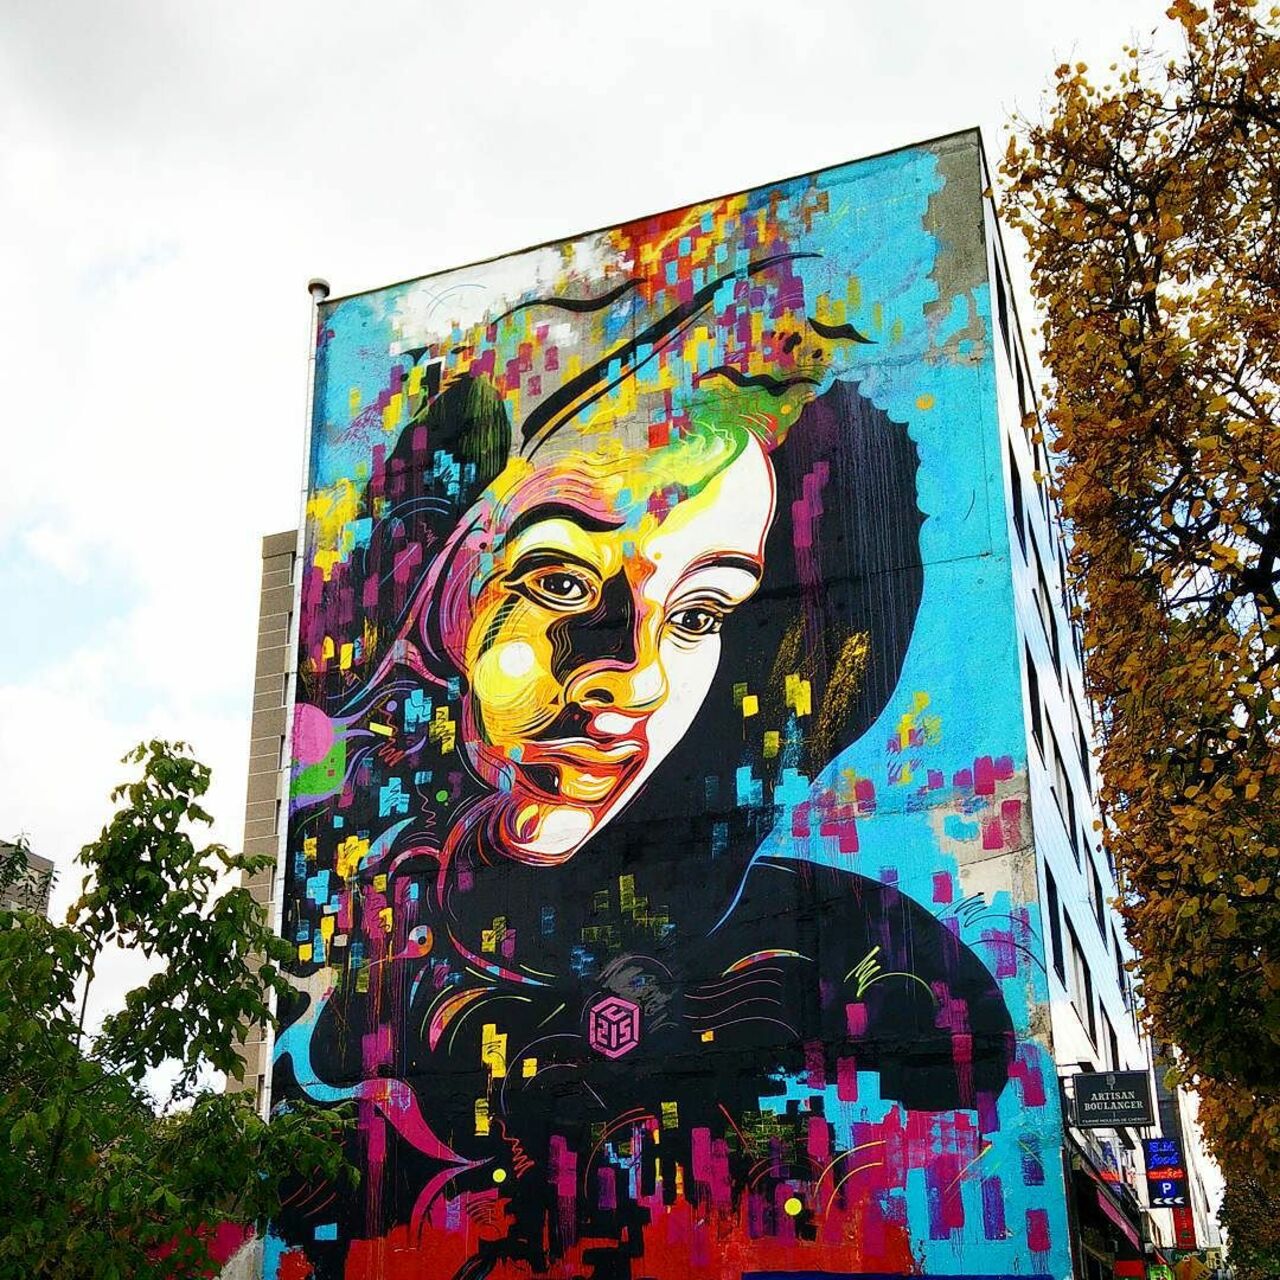 #Paris #graffiti photo by @ceky_art http://ift.tt/1XsfRUG #StreetArt https://t.co/DjVn1DrE0h